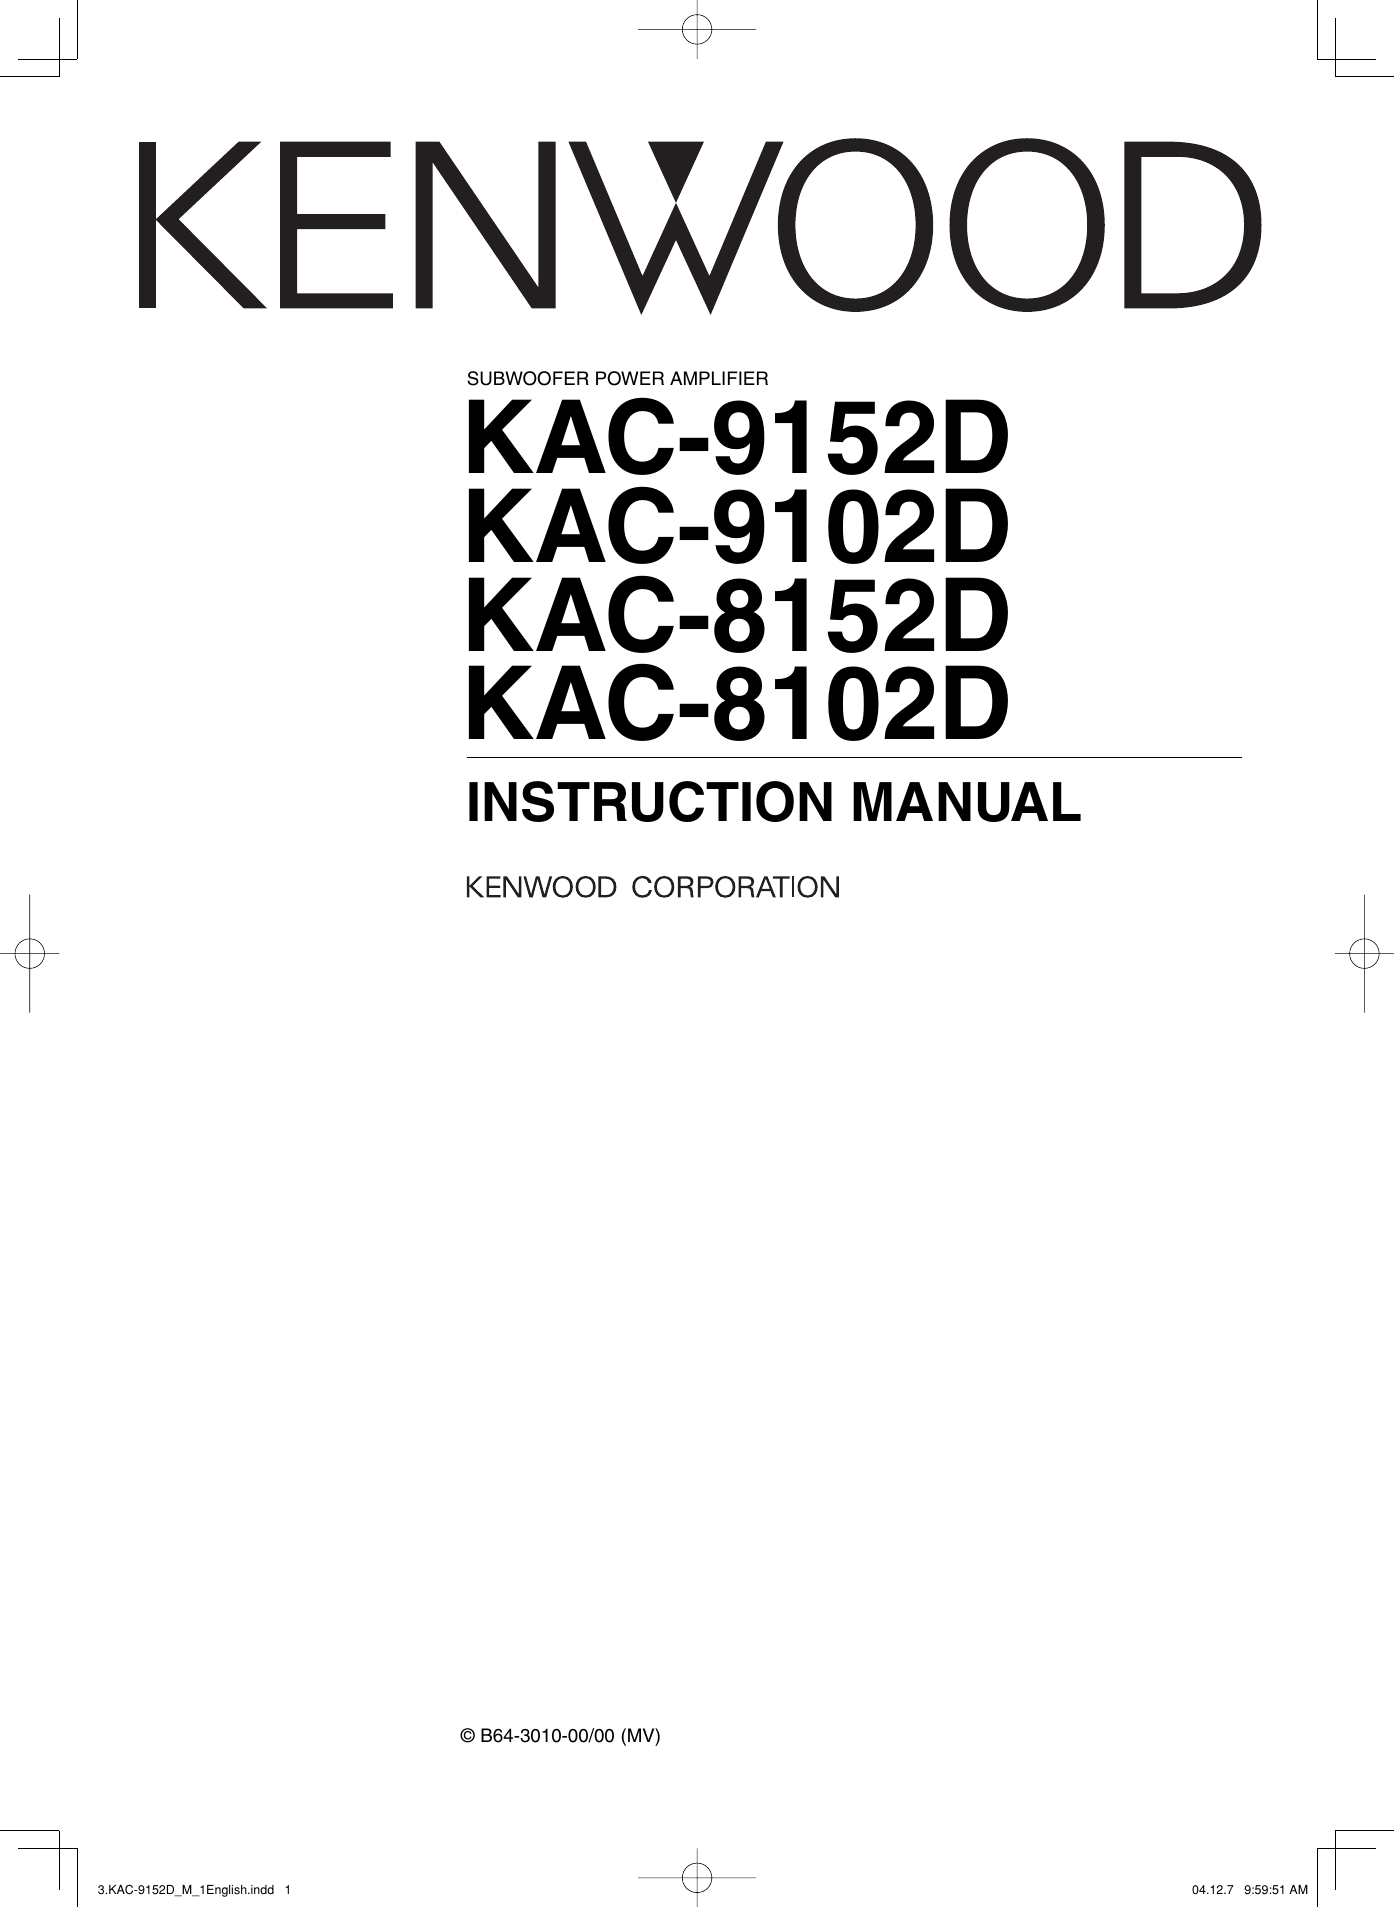 Page 1 of 8 - Kenwood Kenwood-Kac-9152D-Owner-S-Manual KAC-9152D_9102D_8152D_8102D